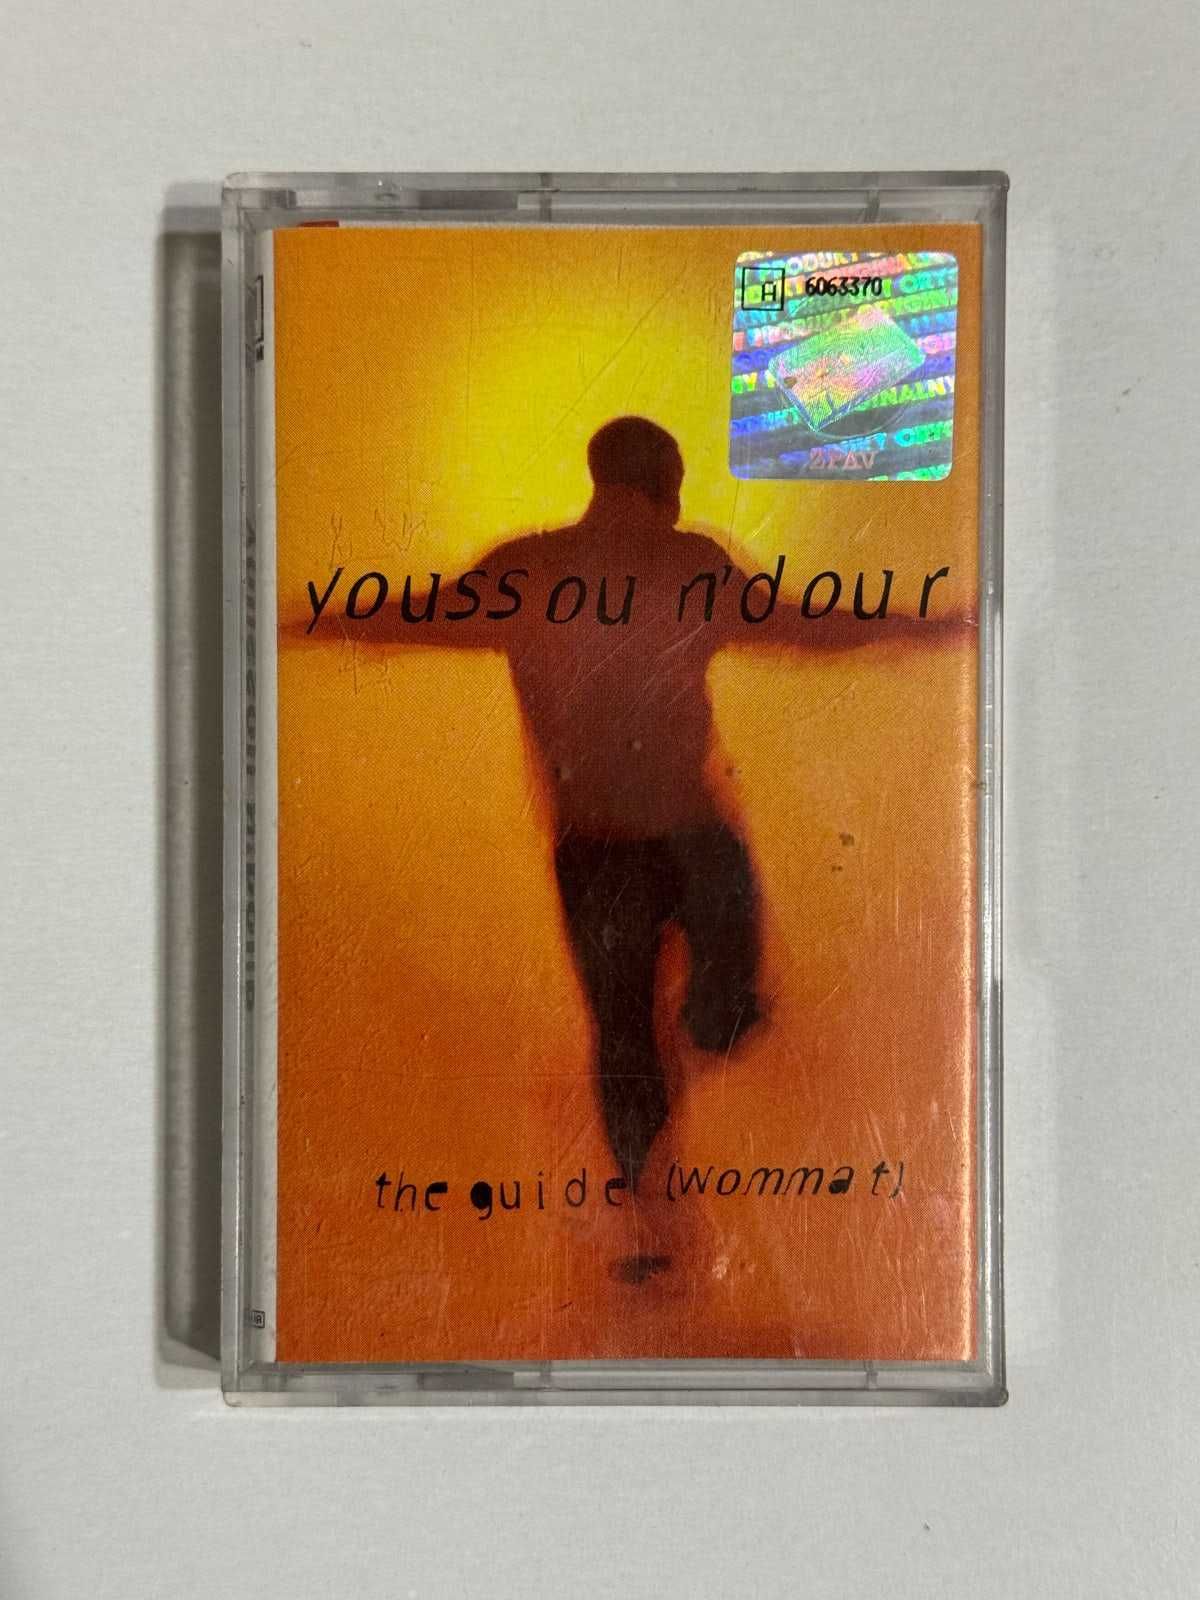 Youssou N'Dour - The Guide (Wommat) (Kaseta)